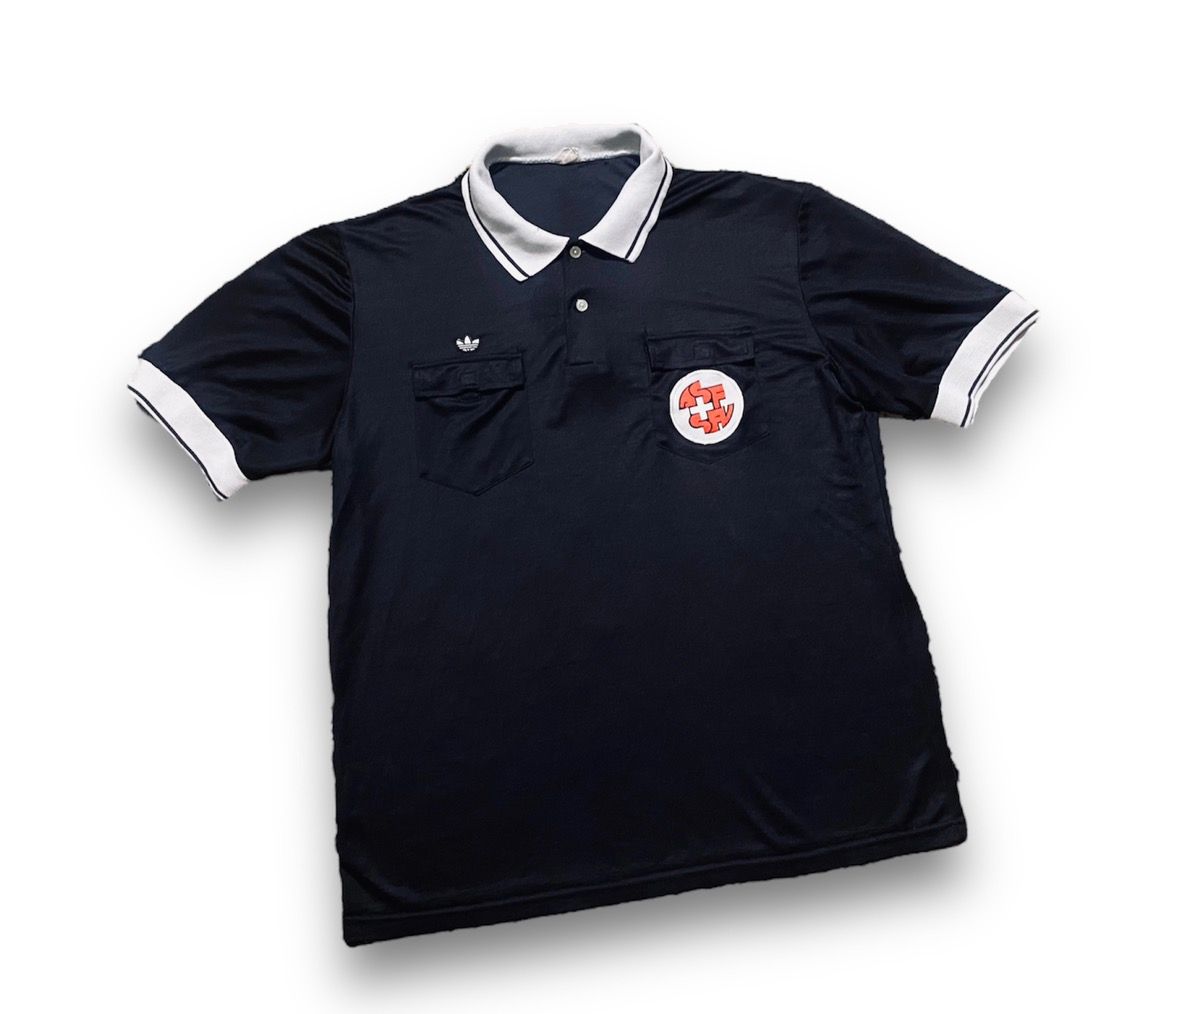 Vintage Adidas Referee Shirt Jersey Switzerland Nation Team - 2